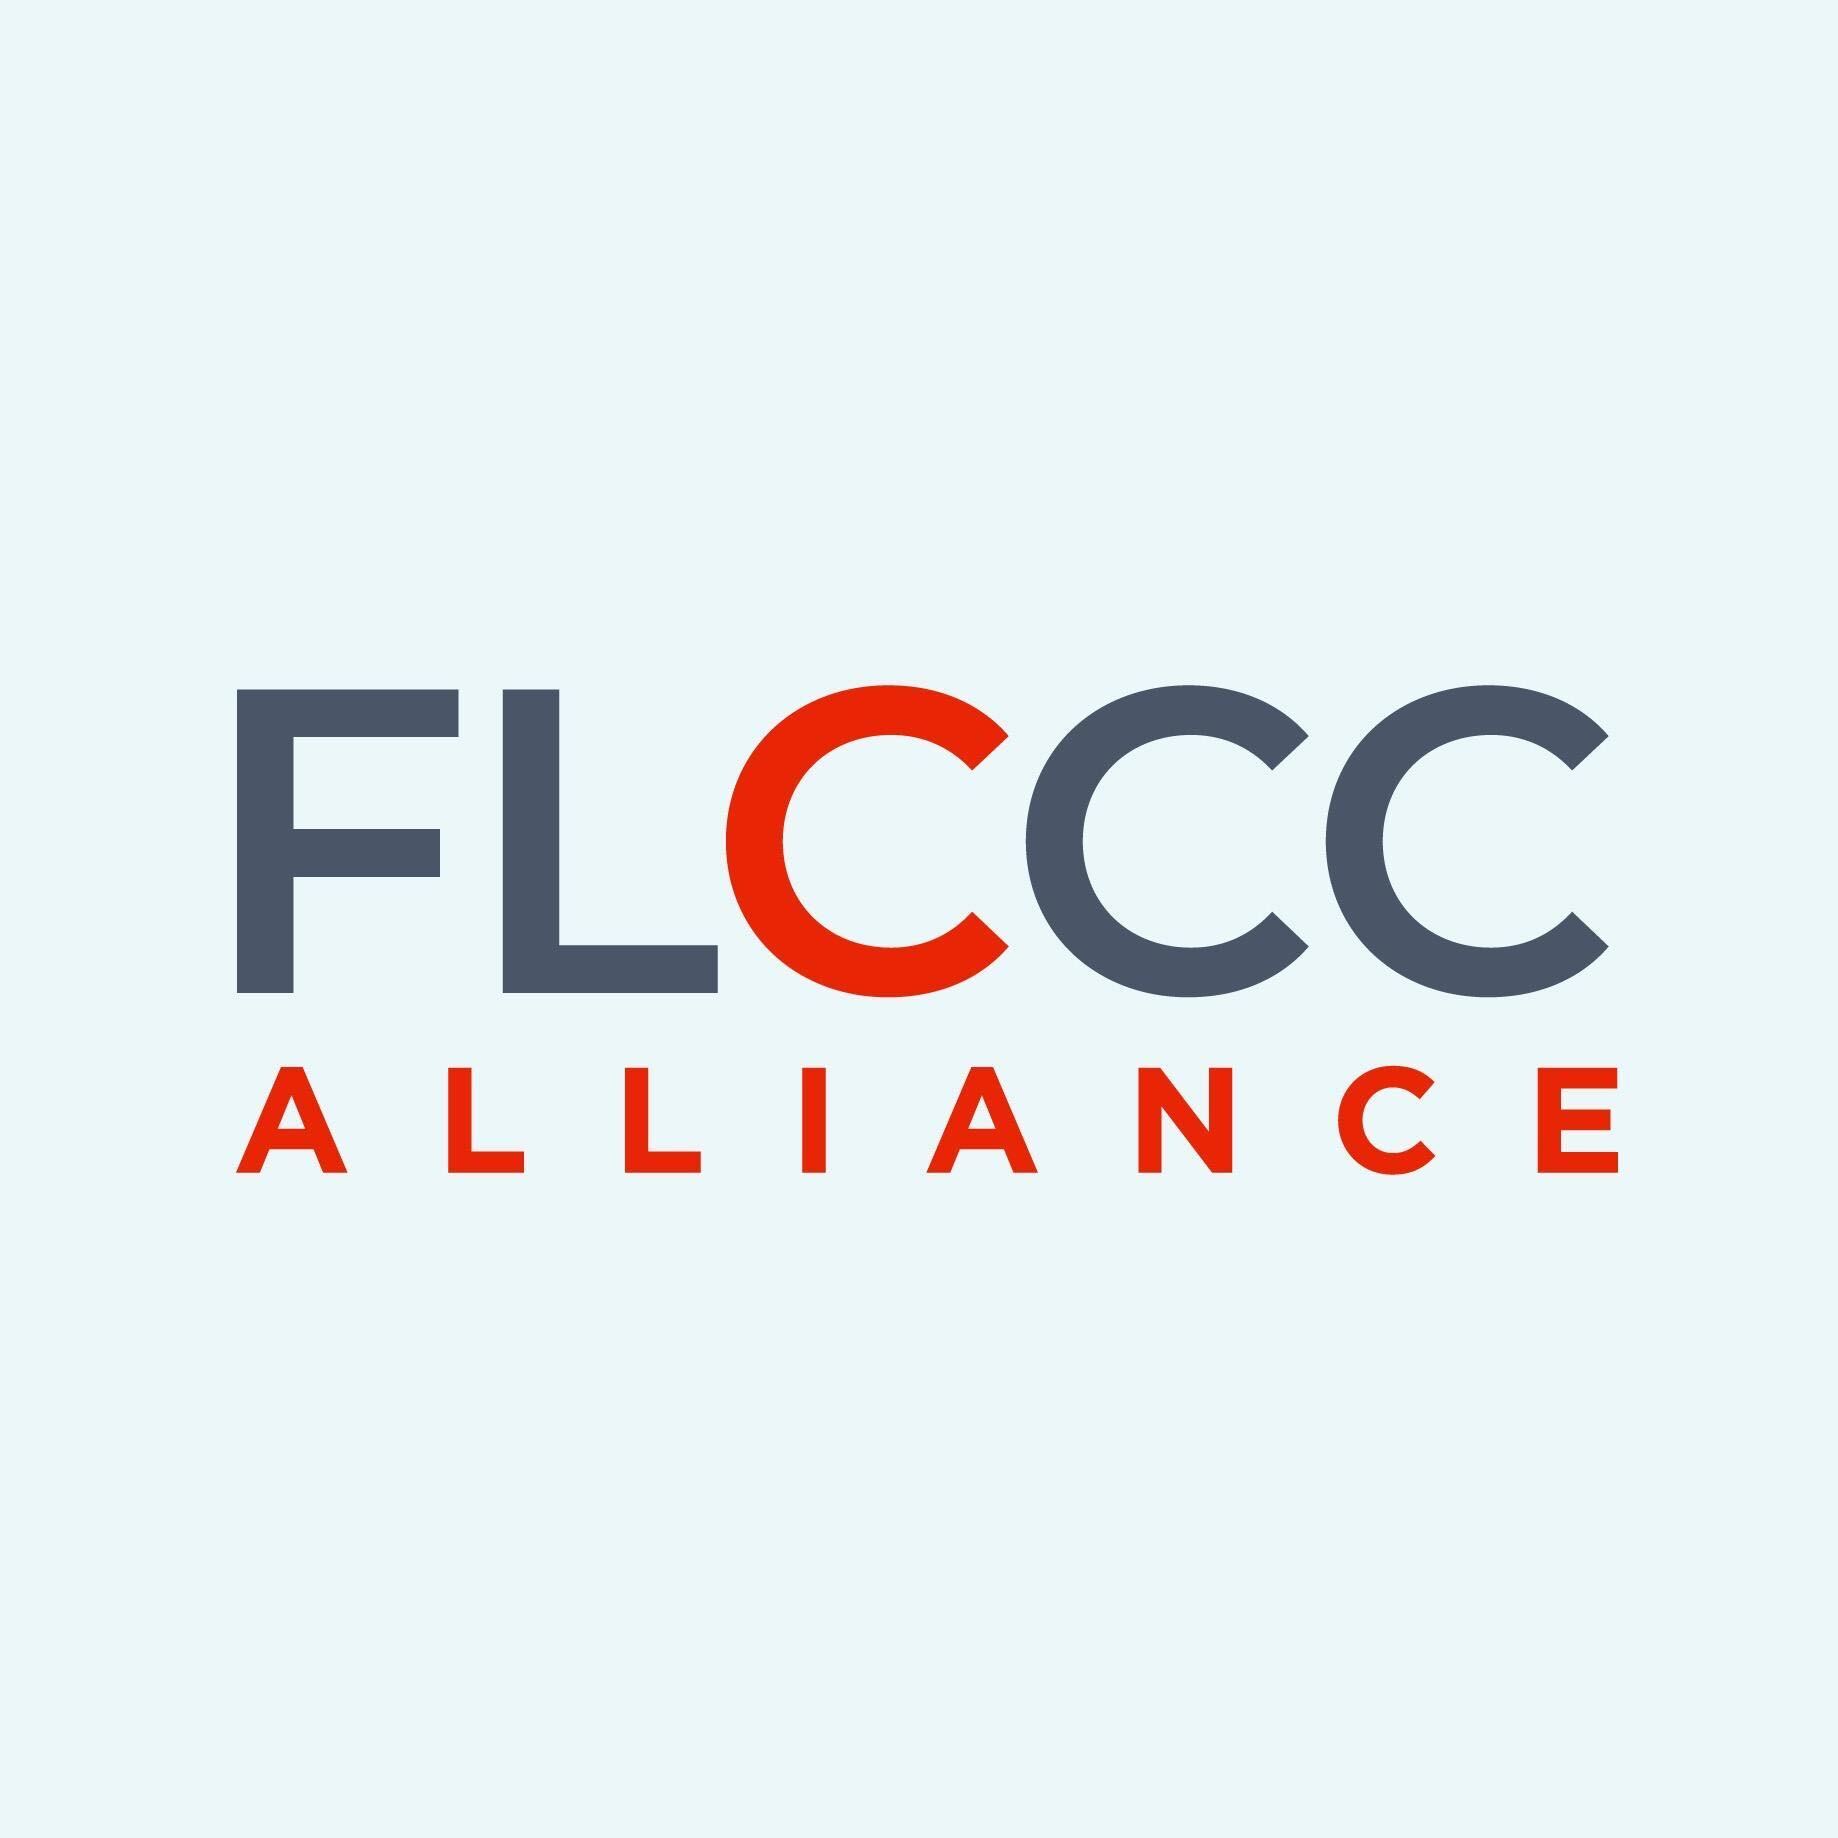 Aliança FLCCC